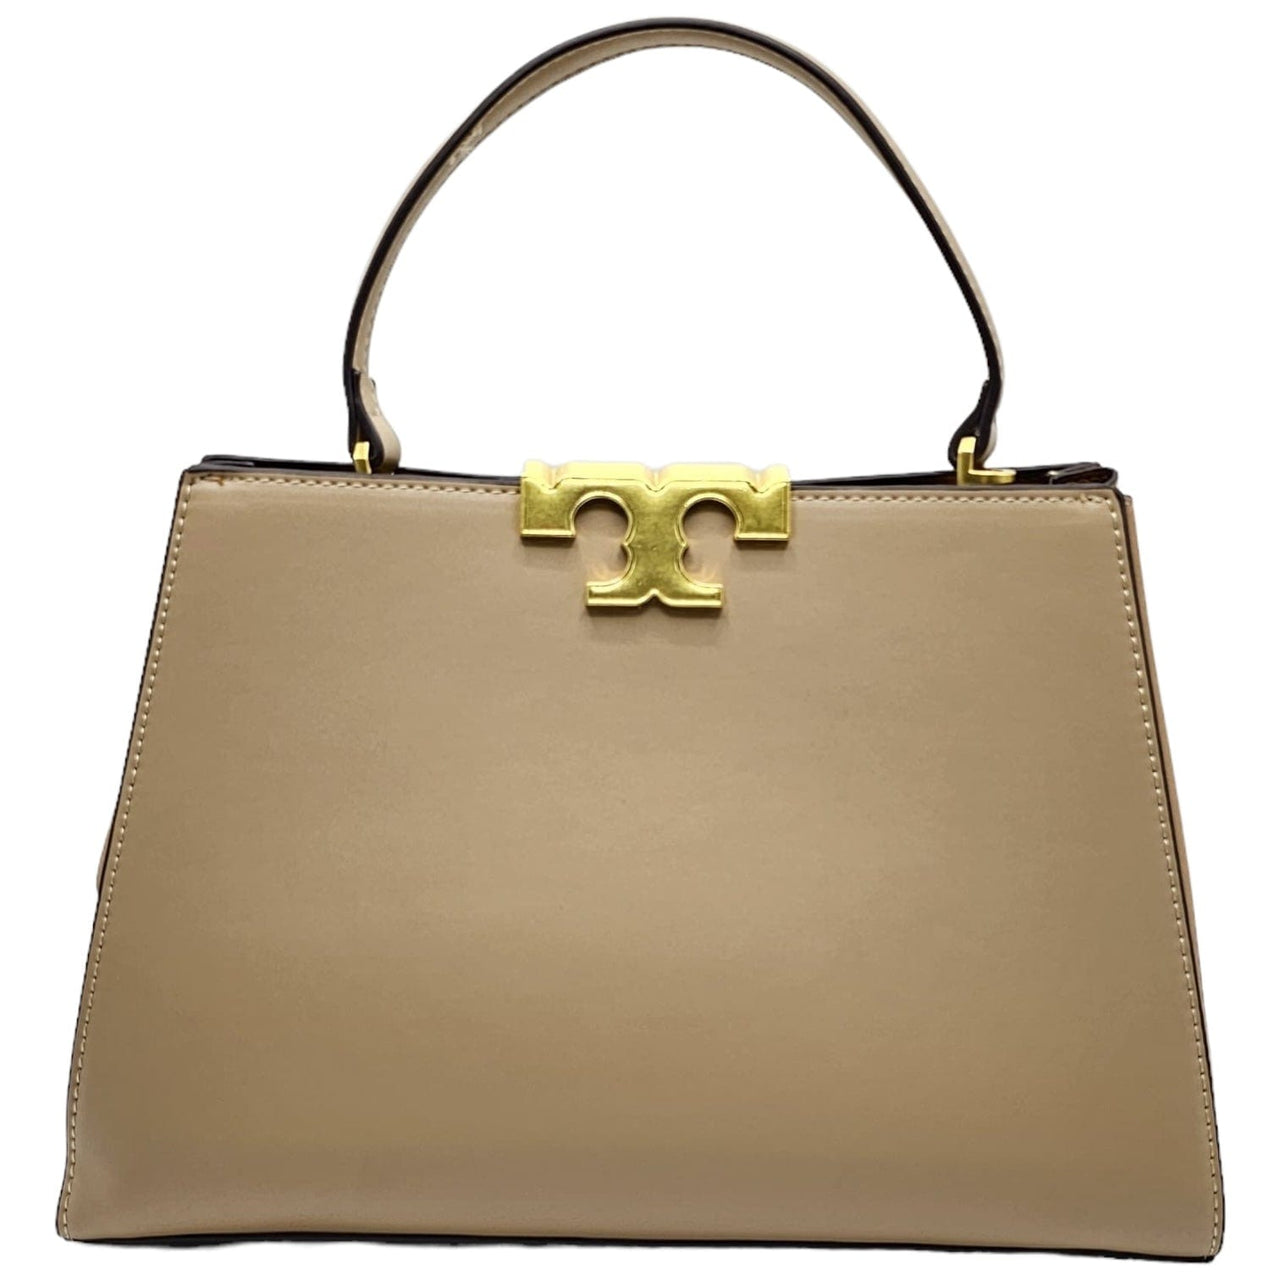 The Bag Couture Handbags, Wallets & Cases Tory Burch Eleanor Satchel Handbag Brown